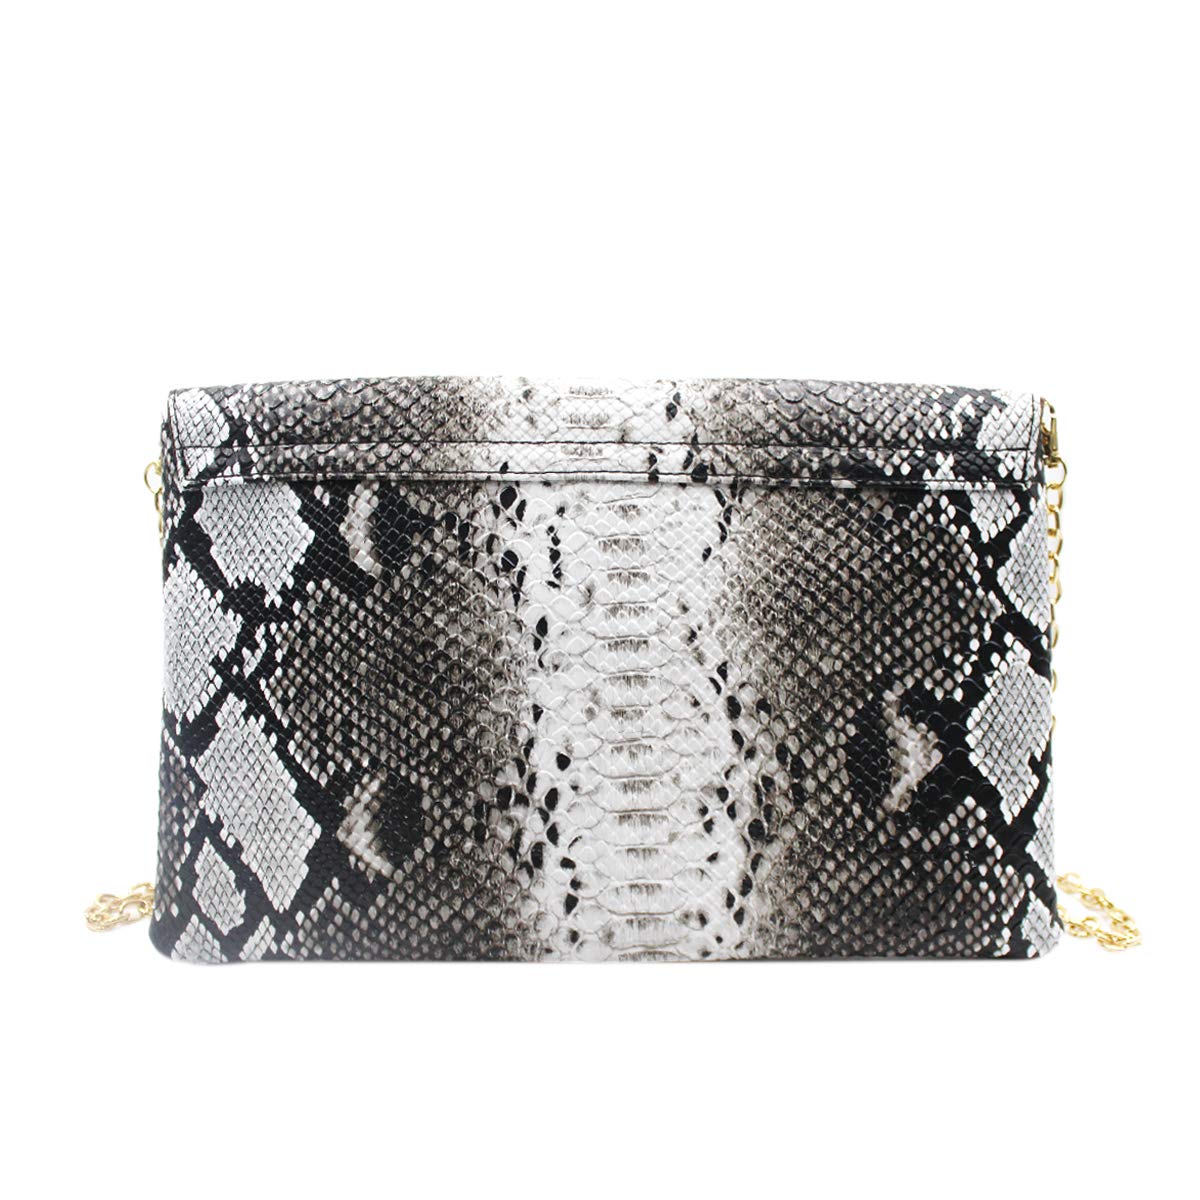 Handbags & Bags - Women Large Envelop Clutch Handbag with Chain Strap Ladies Snakeskin Shoulder ...